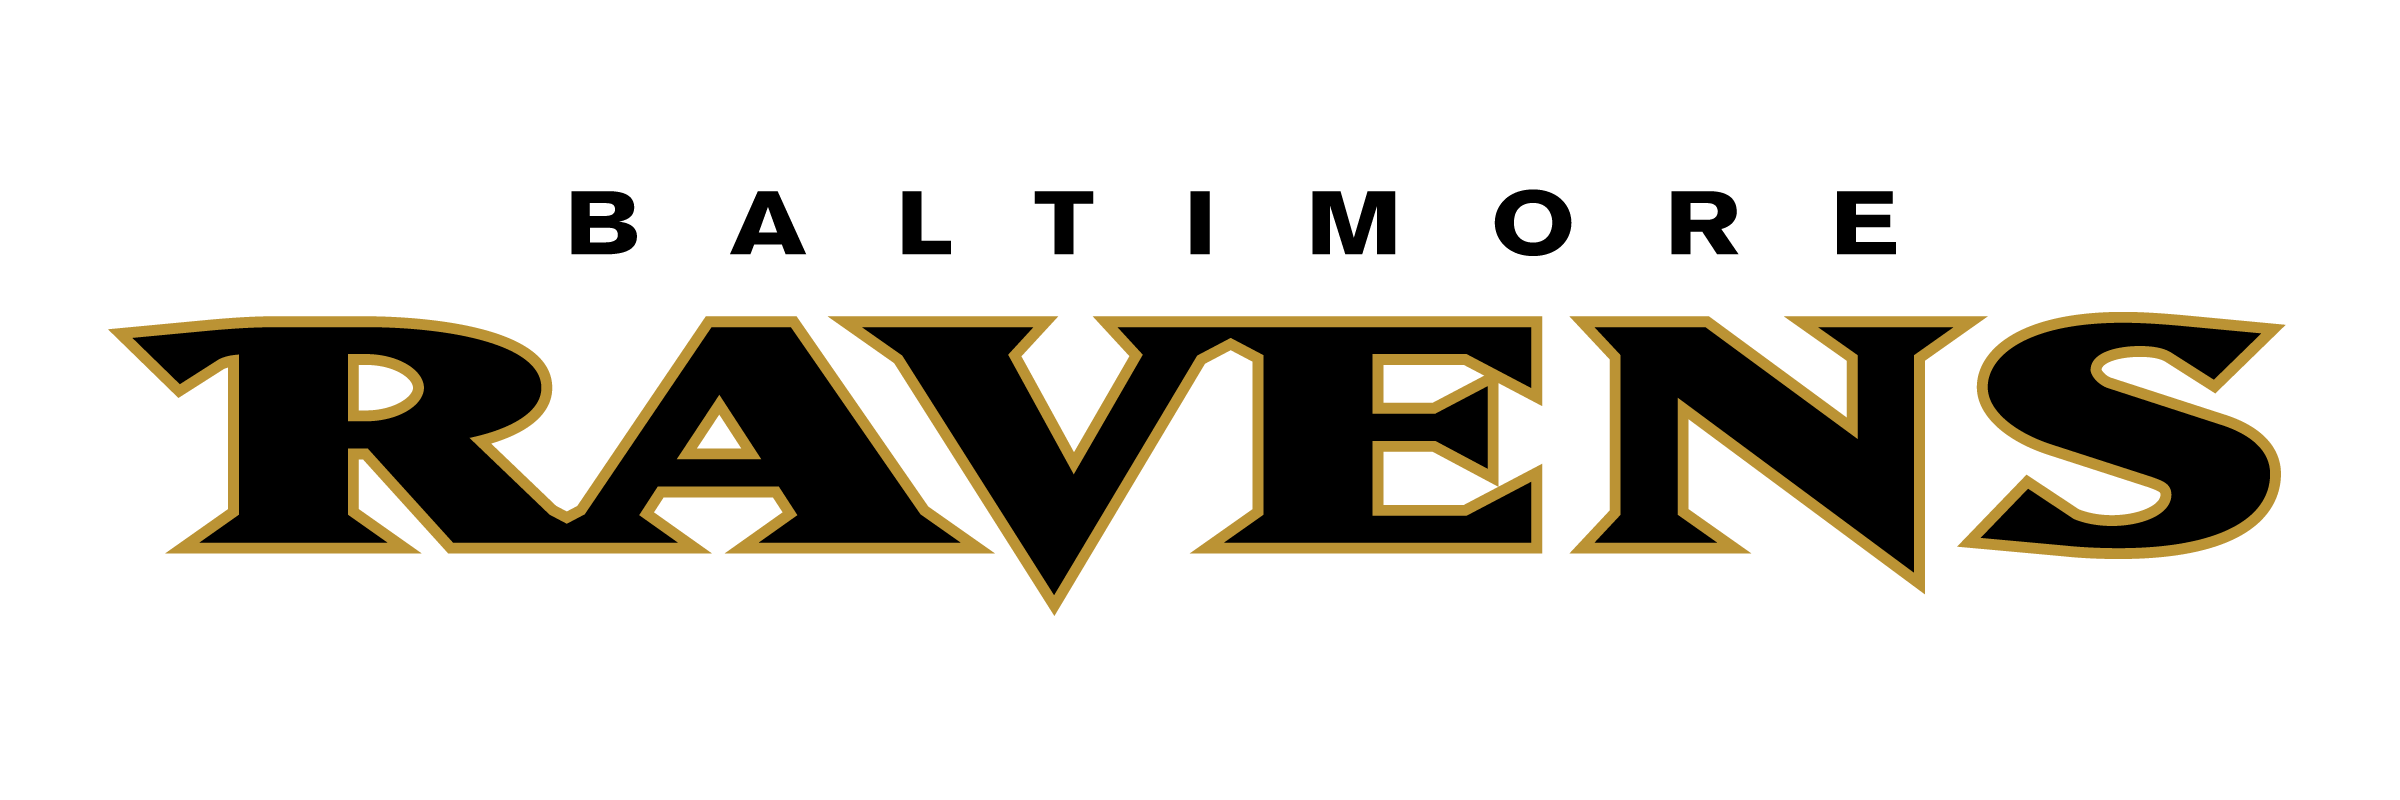 Baltimore Ravens Logo - Baltimore Ravens Logo PNG Transparent & SVG Vector